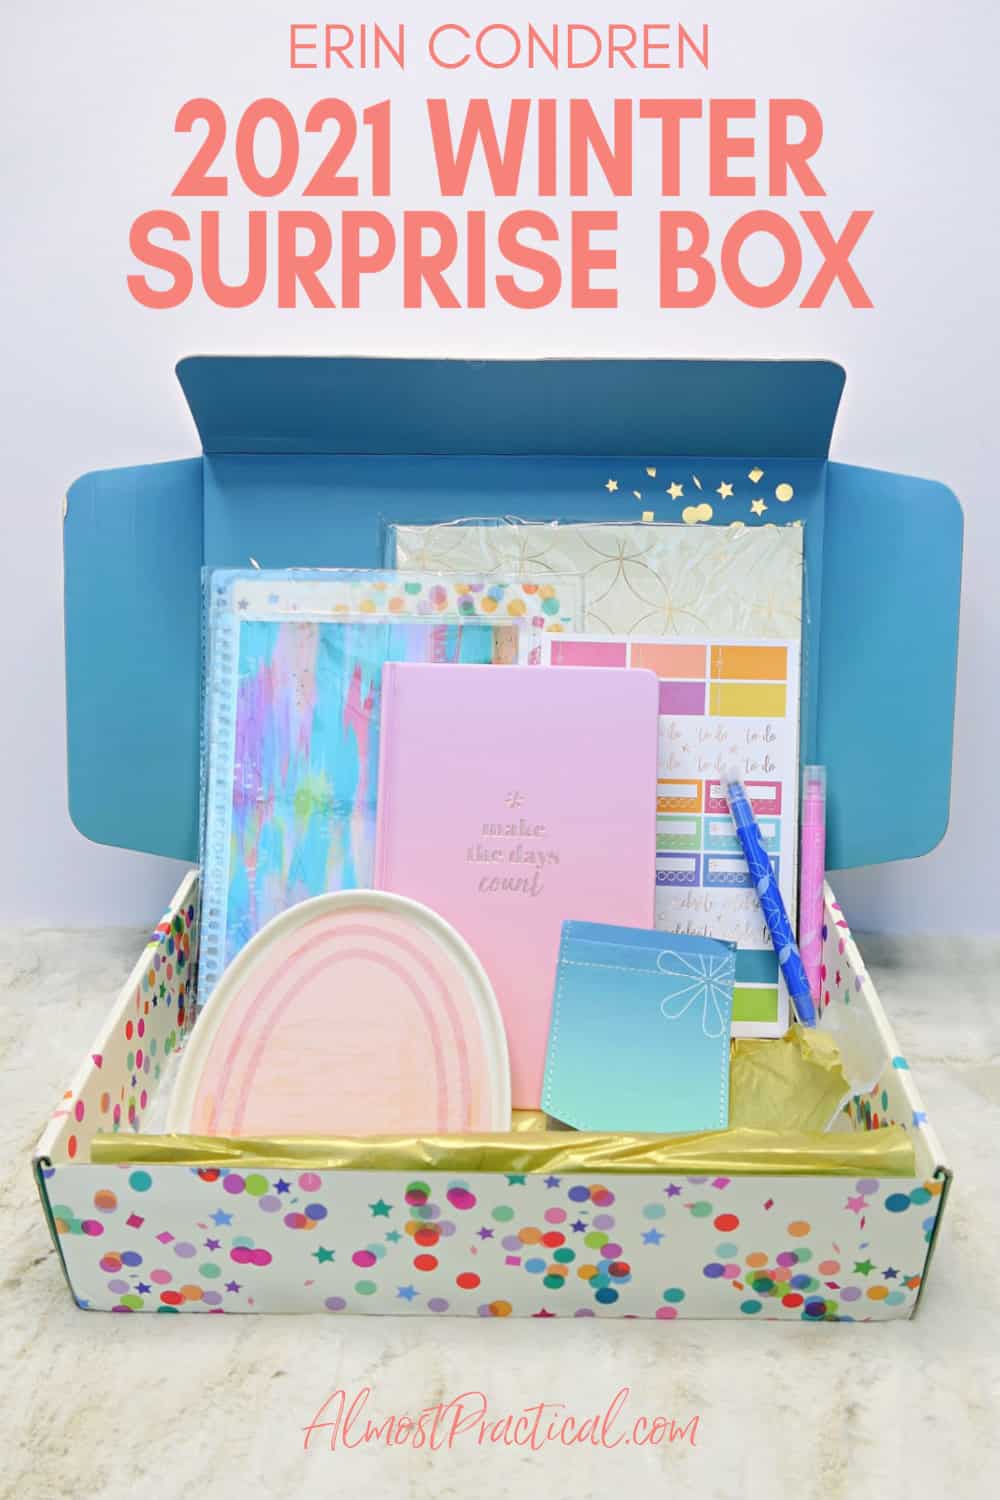 Erin Condren Surprise Box open displaying contents